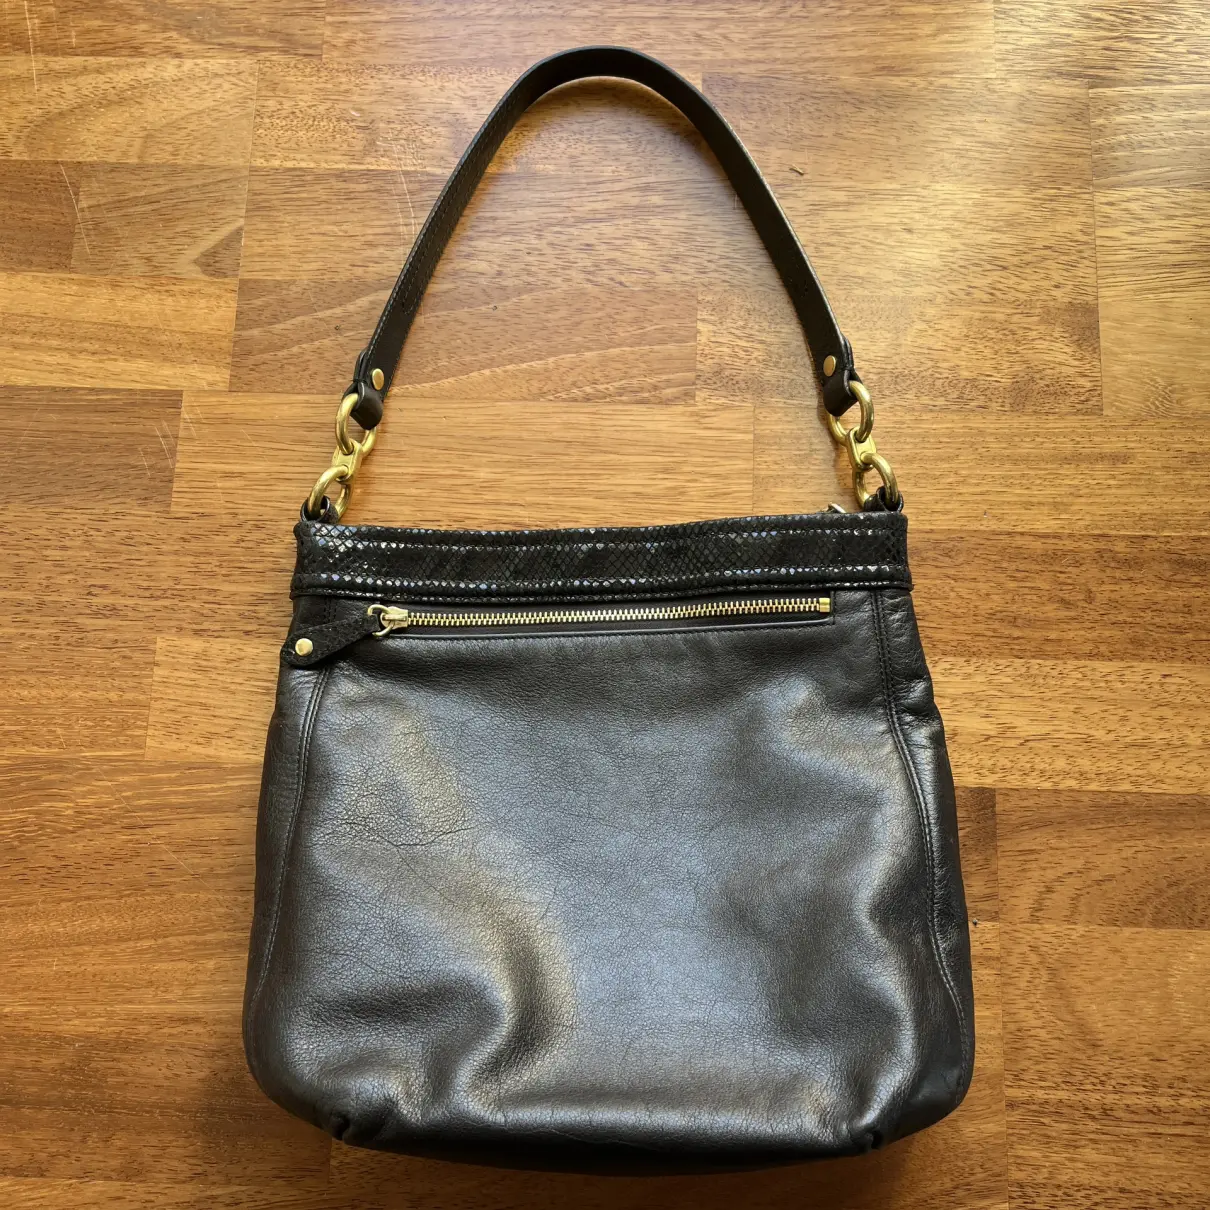 Buy Coach Scout Hobo leather handbag online